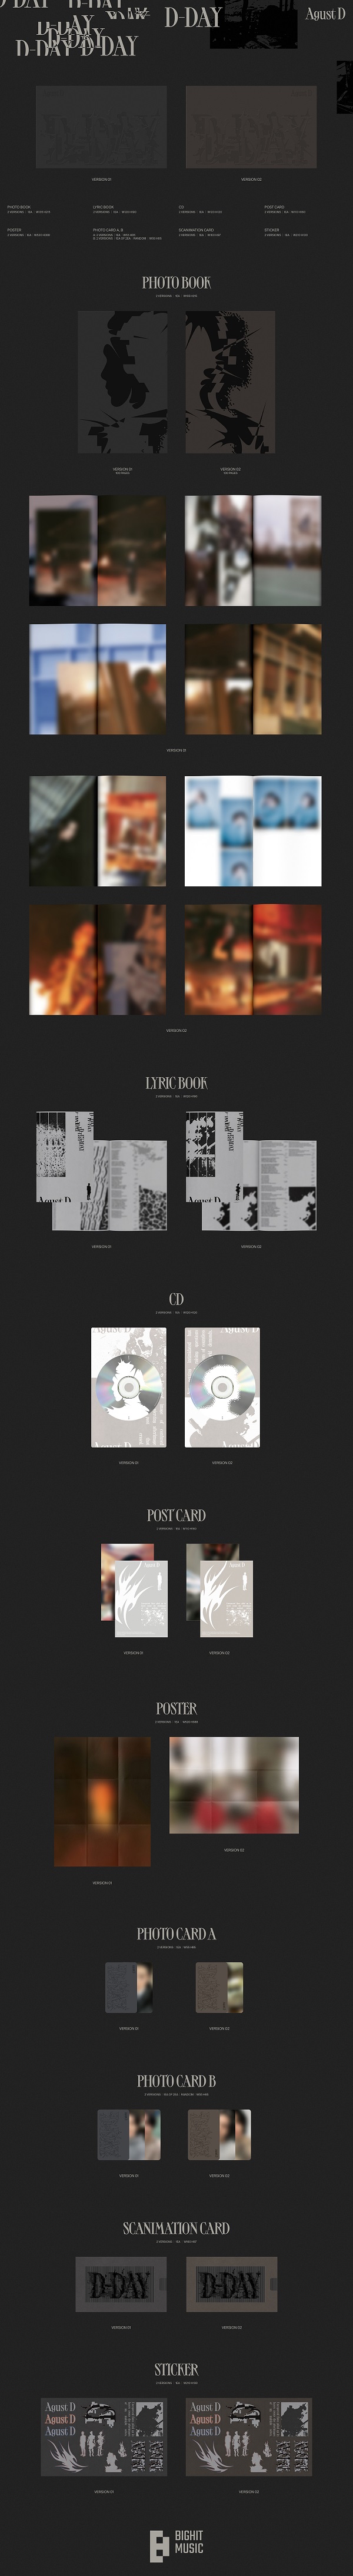 Agust D (SUGA / BTS)｜初のソロアルバム『D-DAY』CD&Weverse Ver.で 